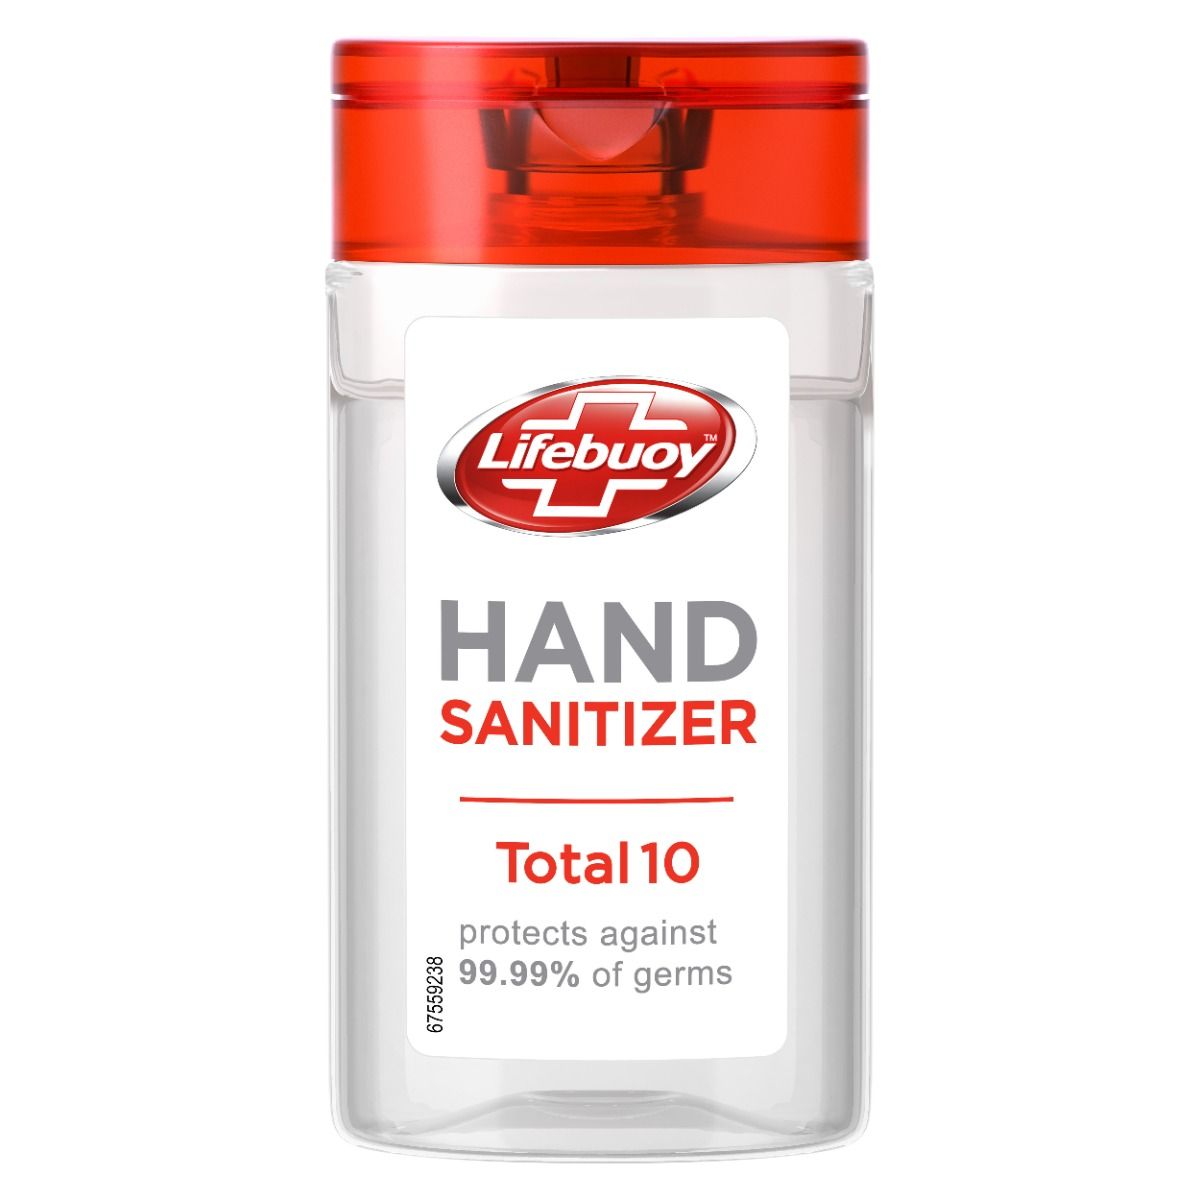 Lifebuoy Total 10 Hand Sanitizer, 50 ml, Pack of 1 